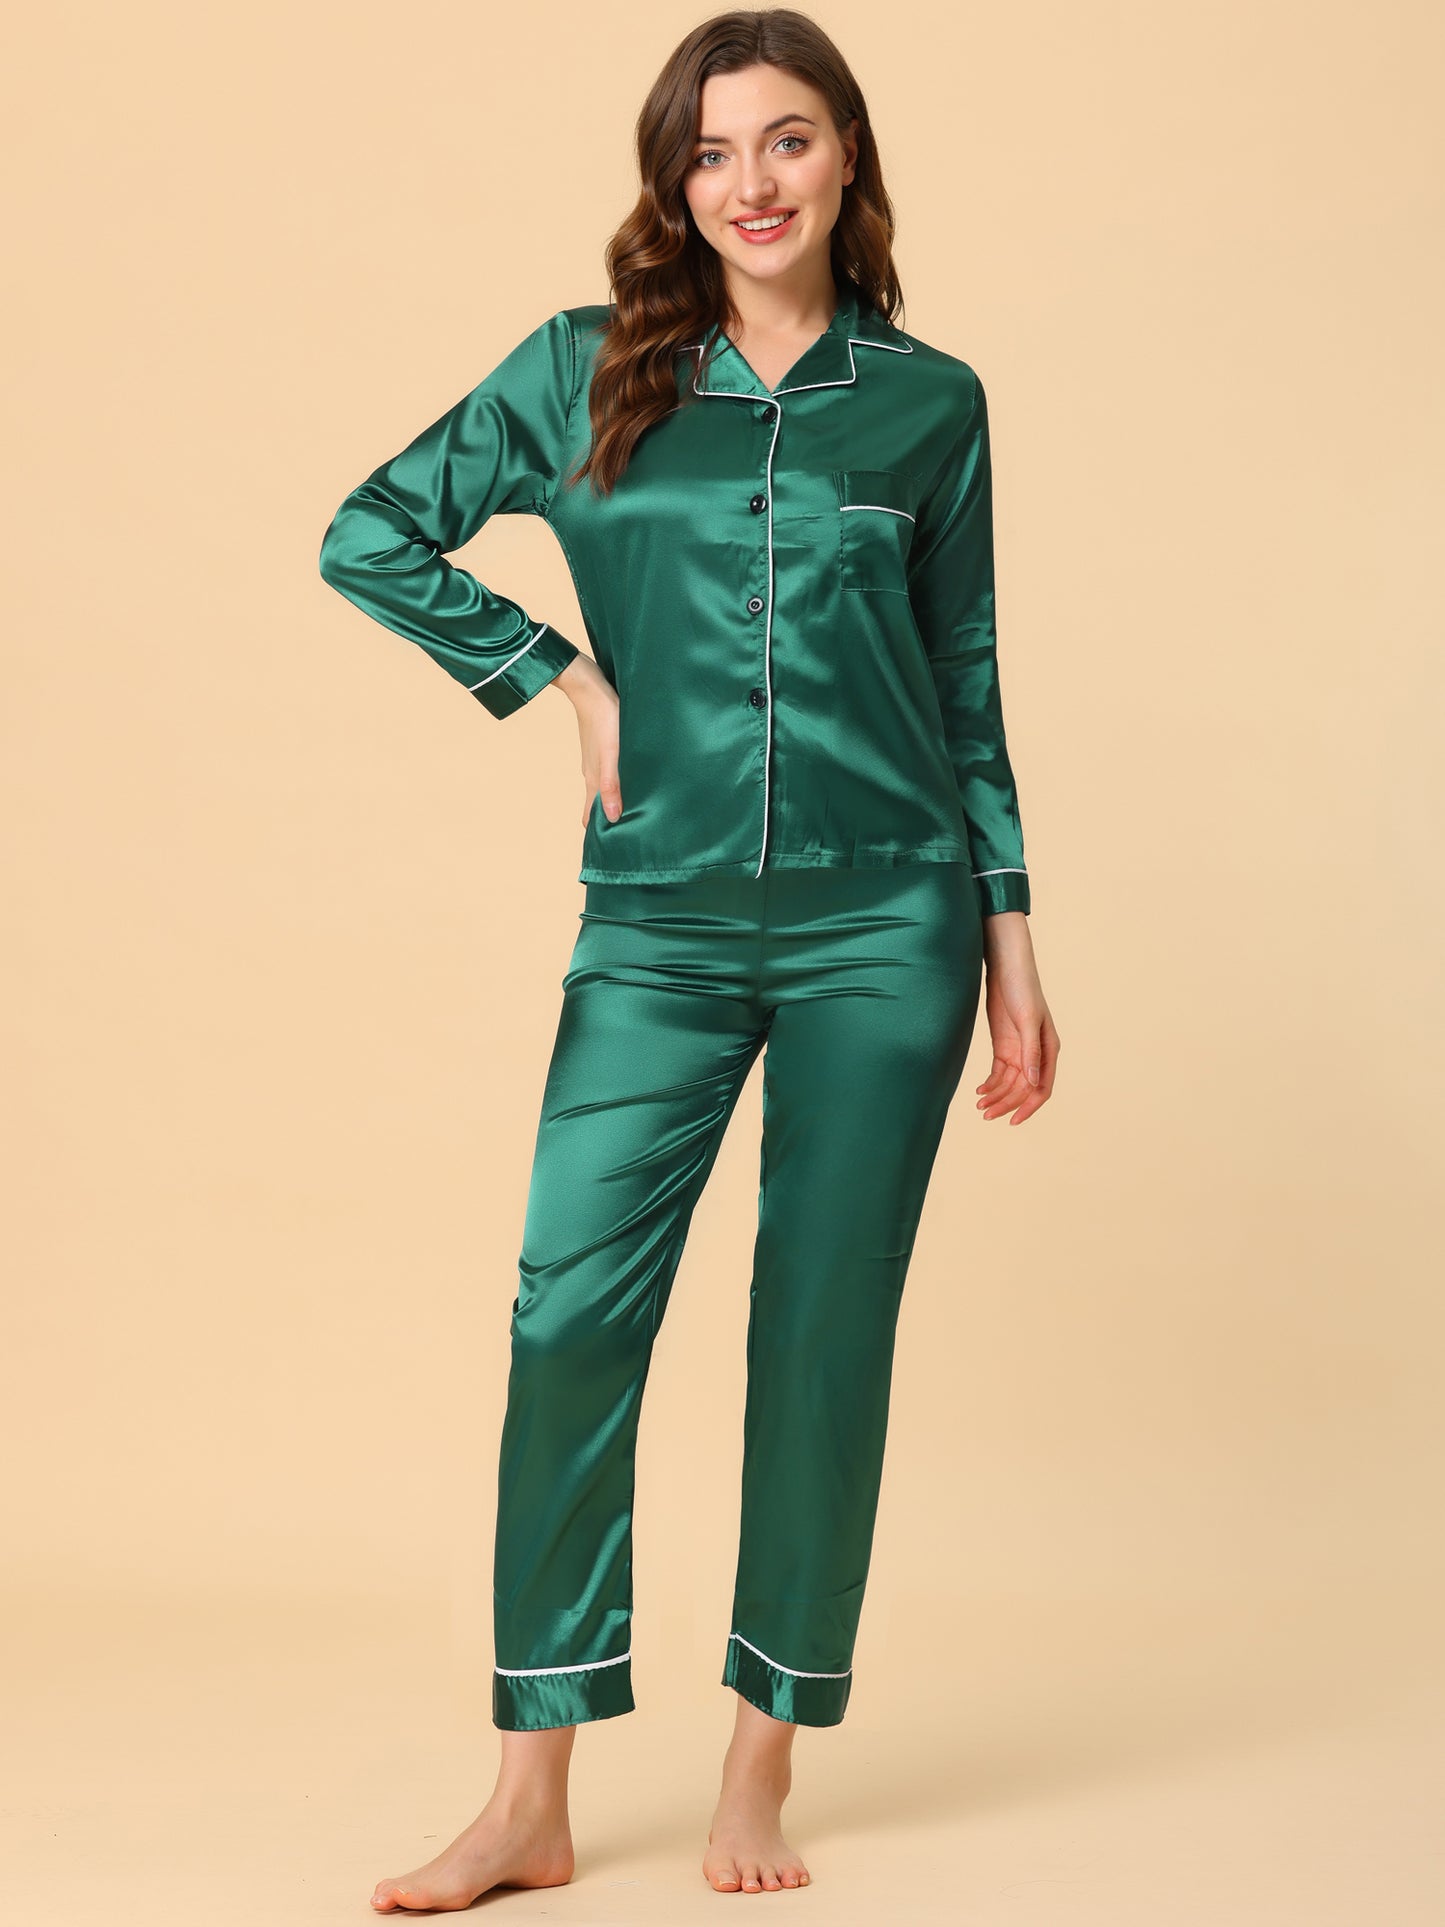 cheibear Pajama Sets Sleepwear Button Down Night Suit Lounge Sets Green